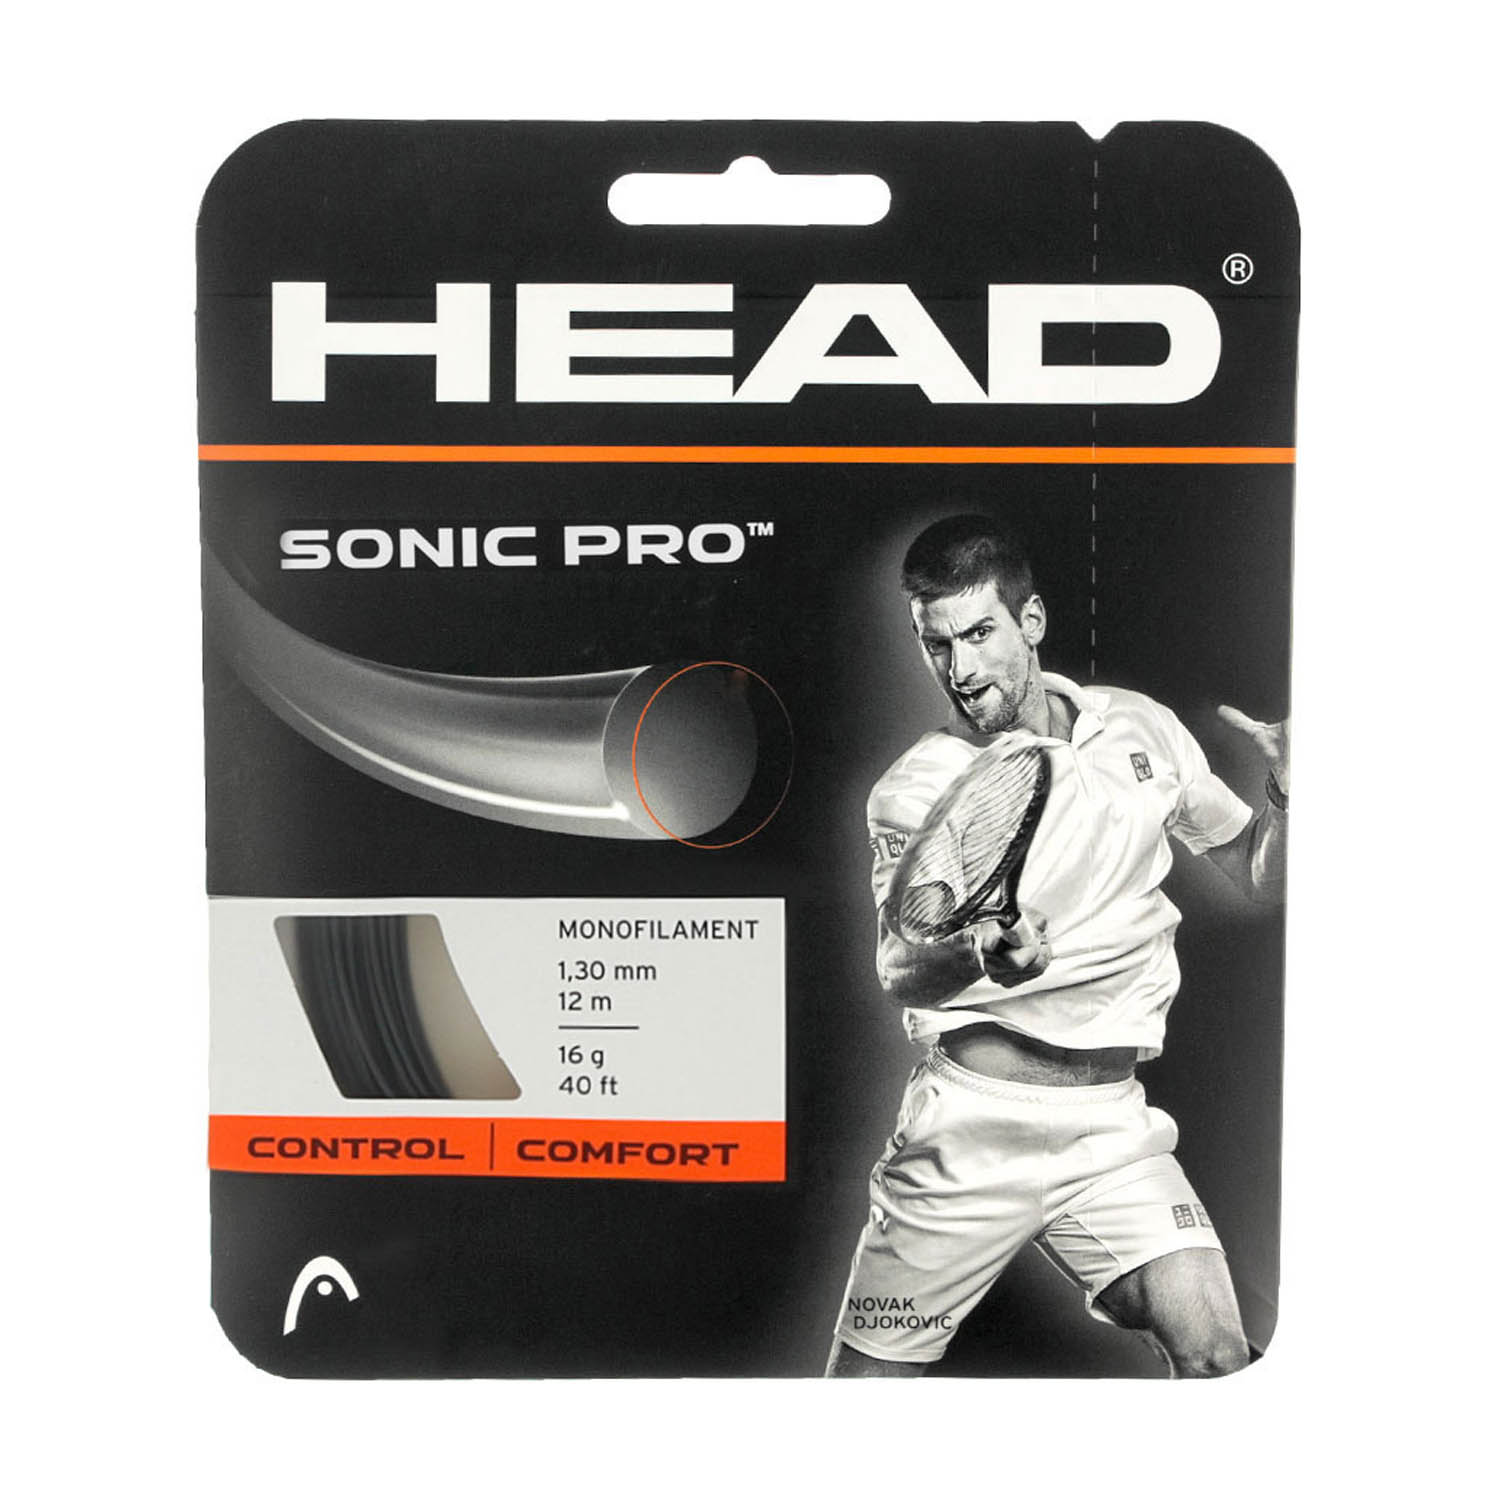 Head Sonic Pro 1.30 12 m Set - Black